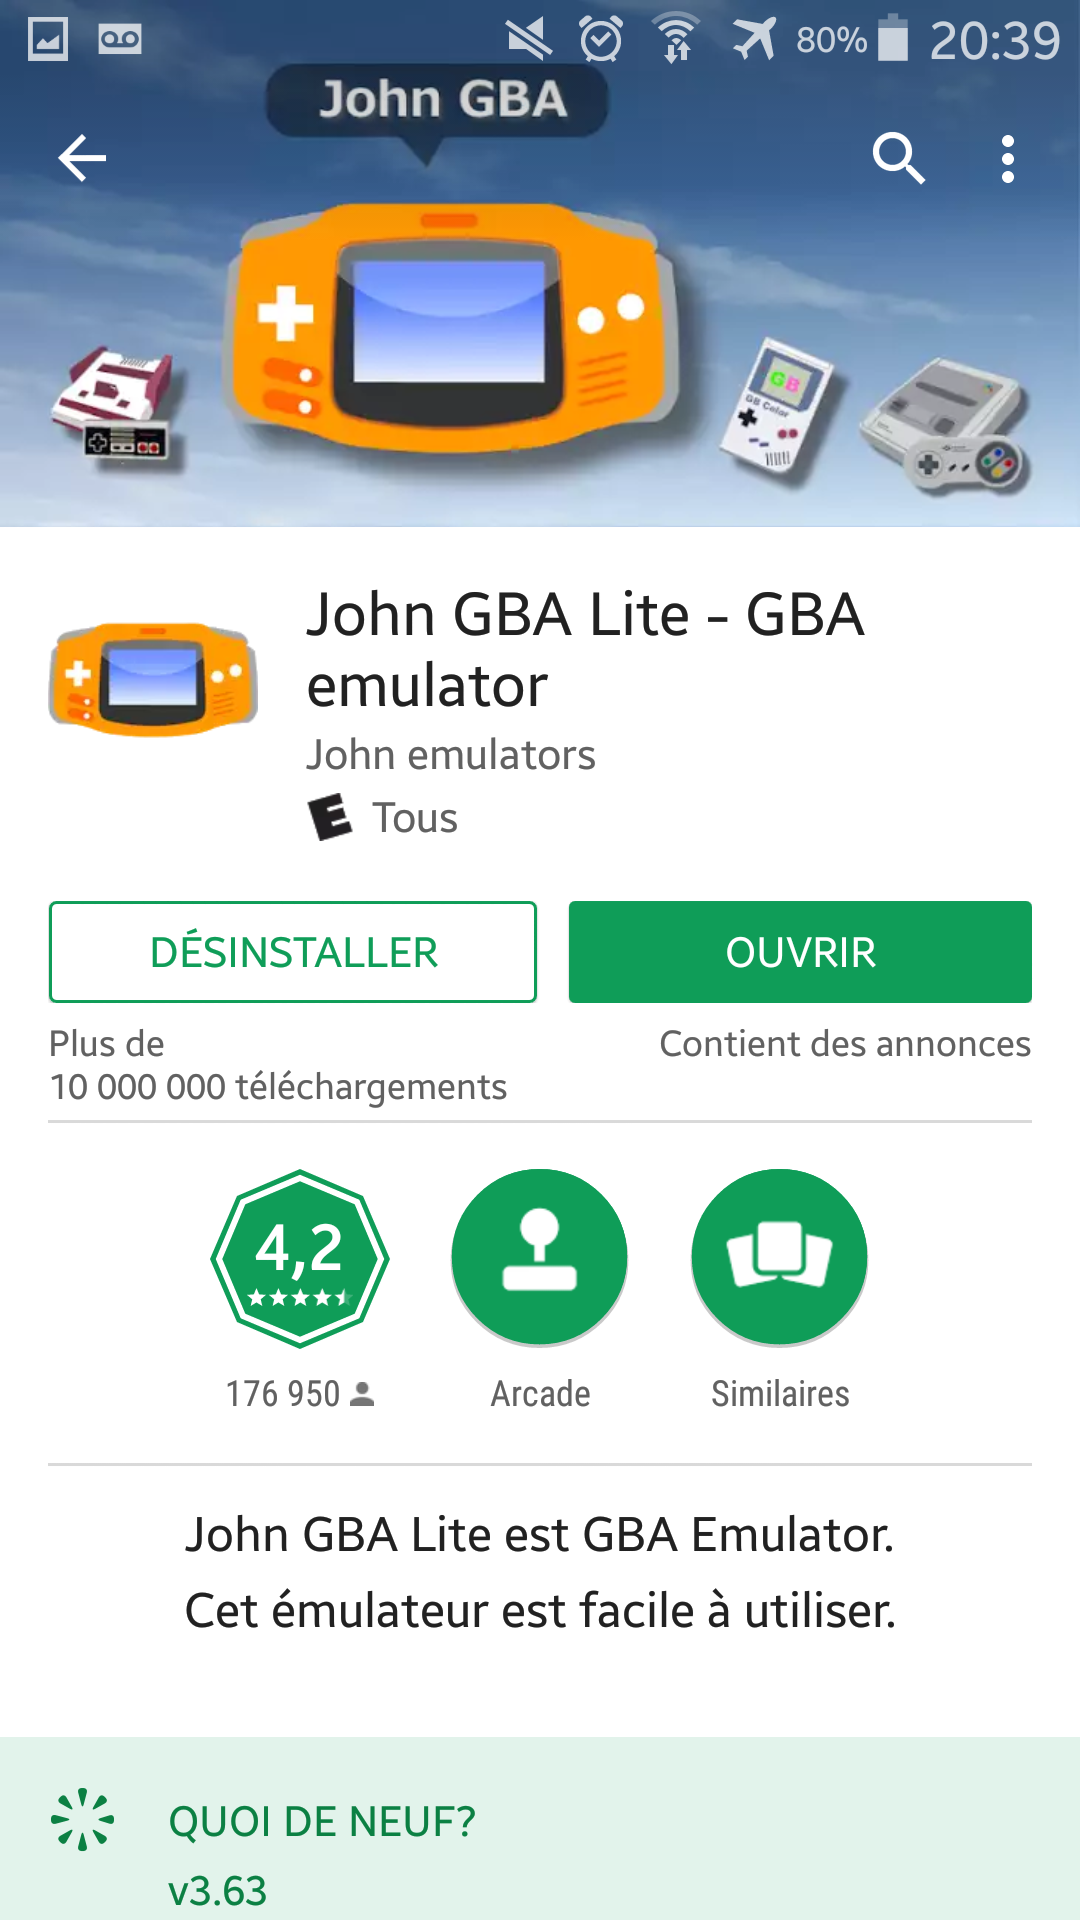 My Boy! Free - GBA Emulator APK para Android - Download